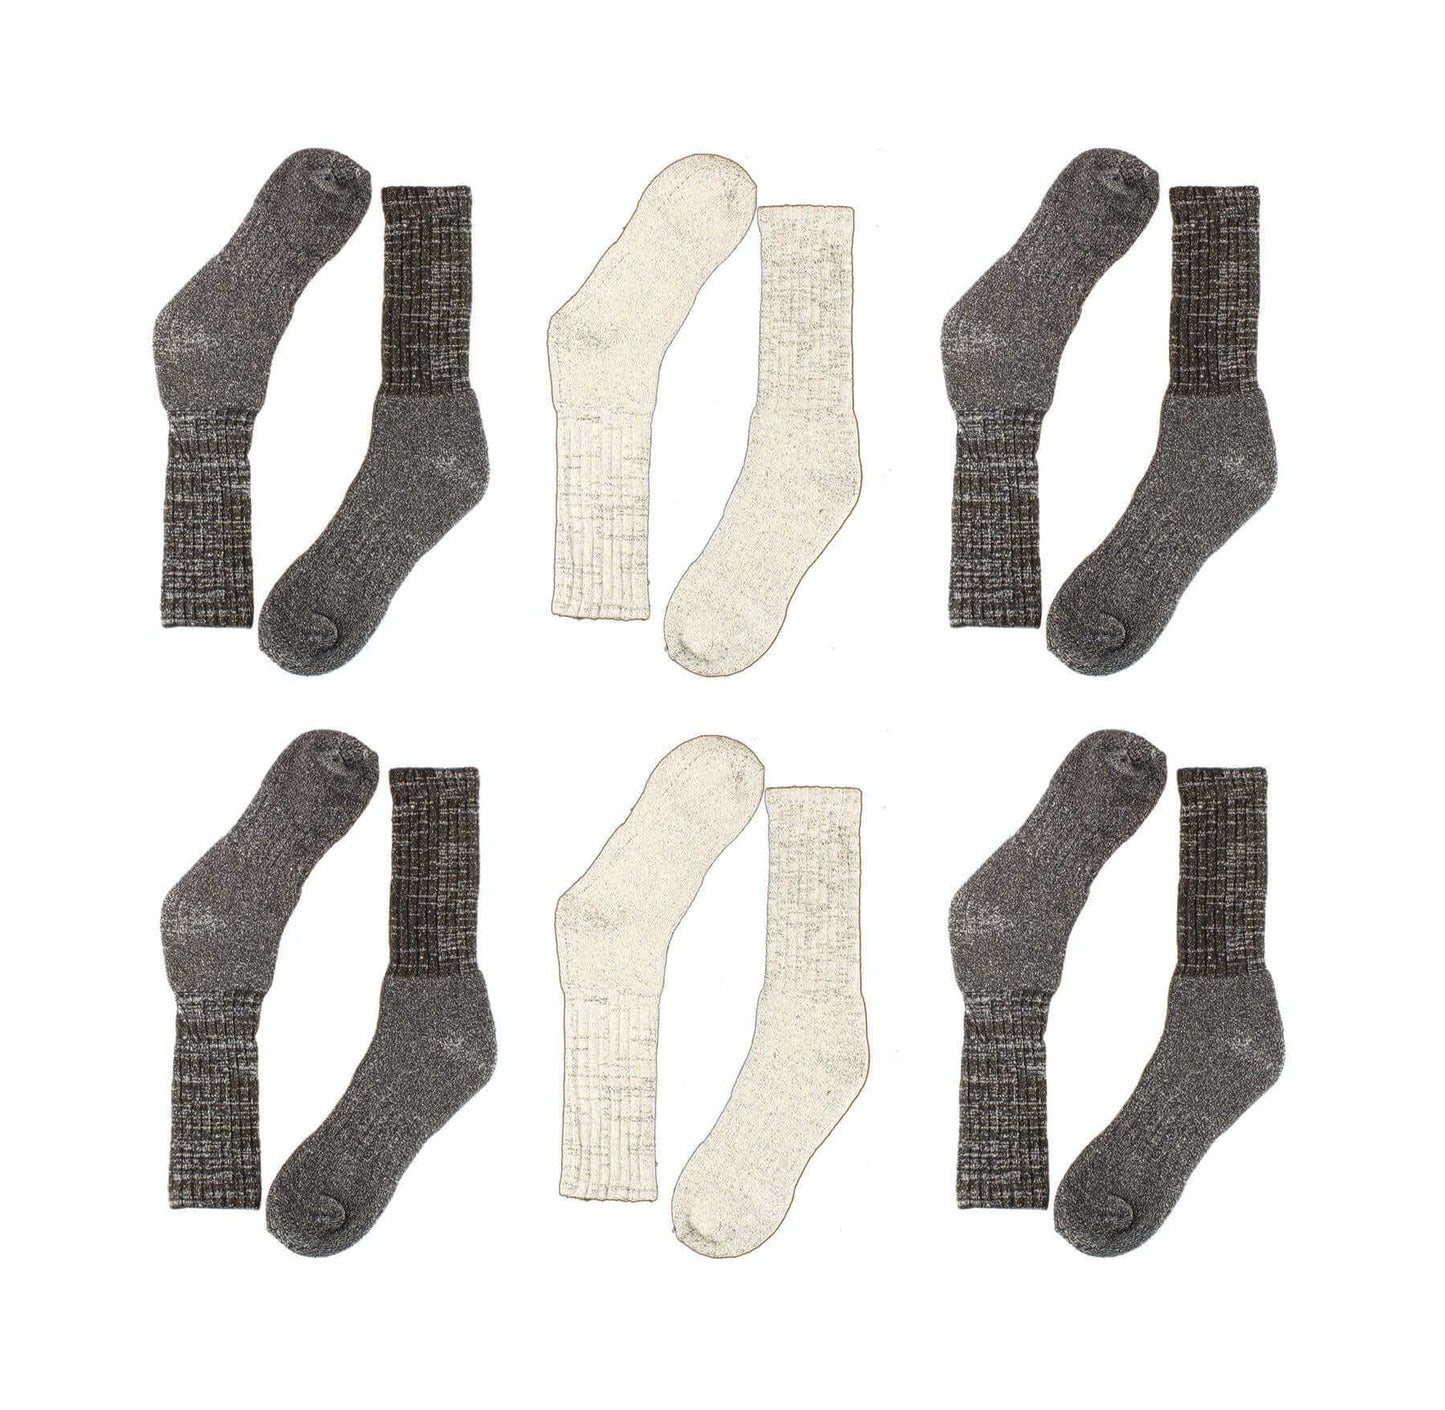 12 Pairs Of Men's Merino Wool Socks Thermal Work Boot Sock. Buy now for £7.00. A Socks by Sock Stack. 6-11, assorted, athletics, baselayer, black, boot, boys, breathable, charcoal, comfortable, elastane, grey, hiking, mens, mens socks, merino wool, natura